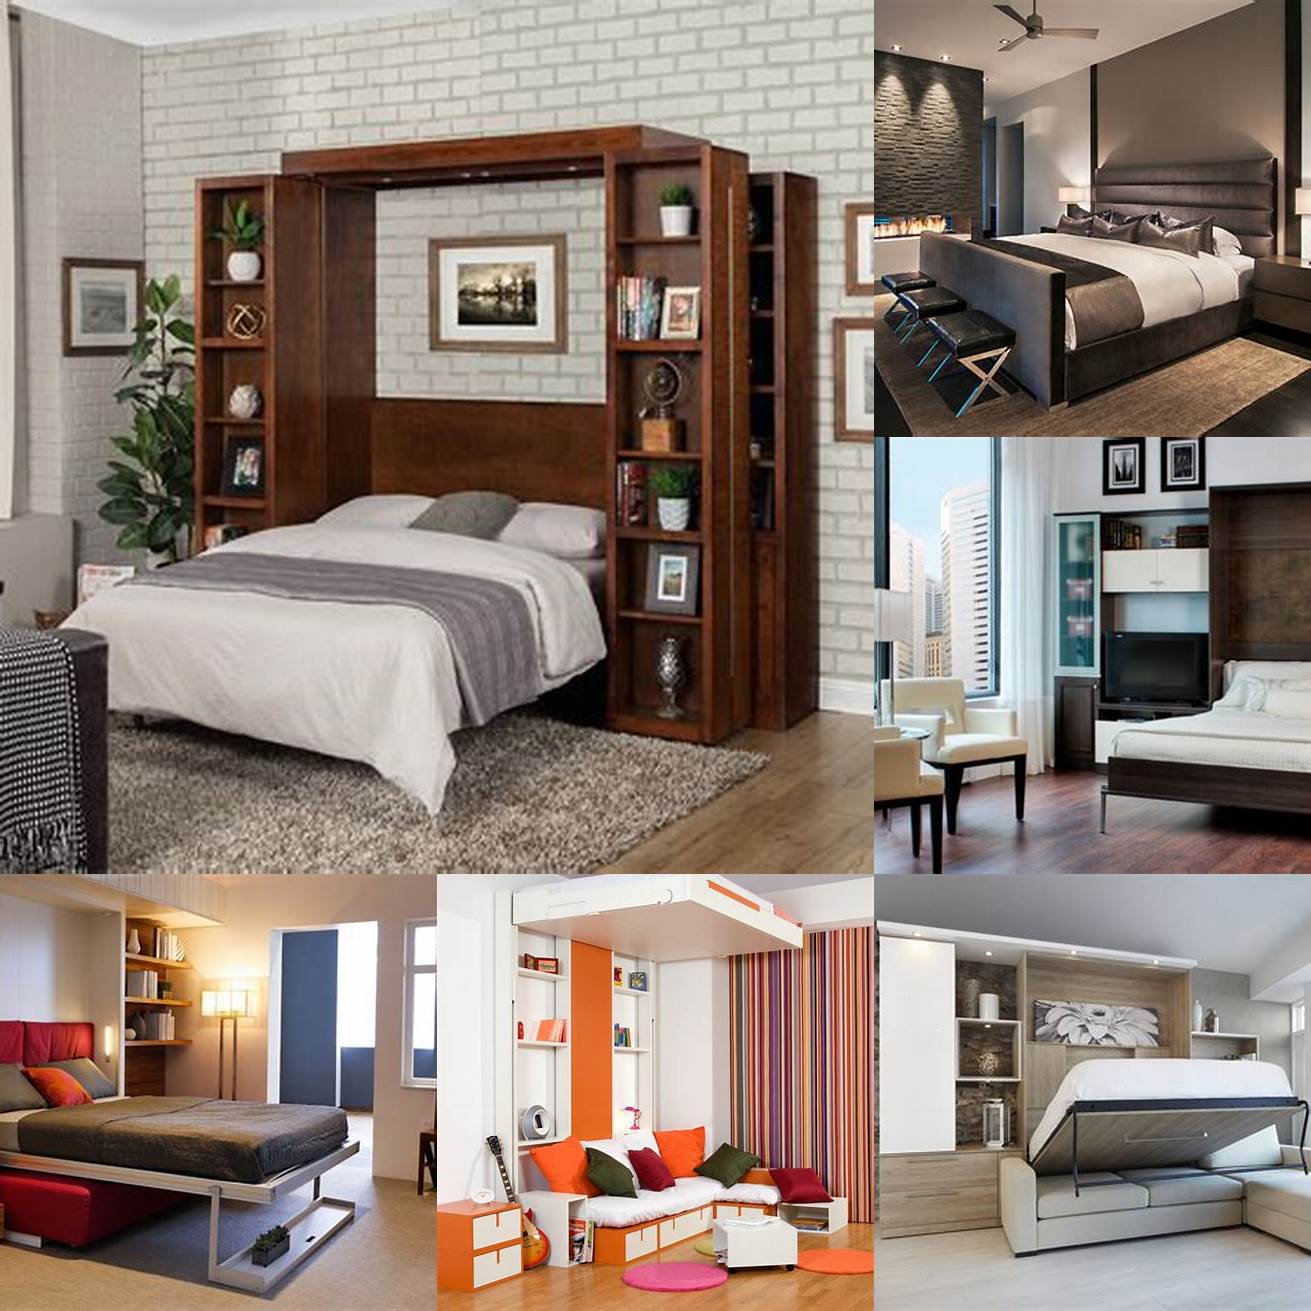 A sleek modern hideaway bed in a high-rise apartment